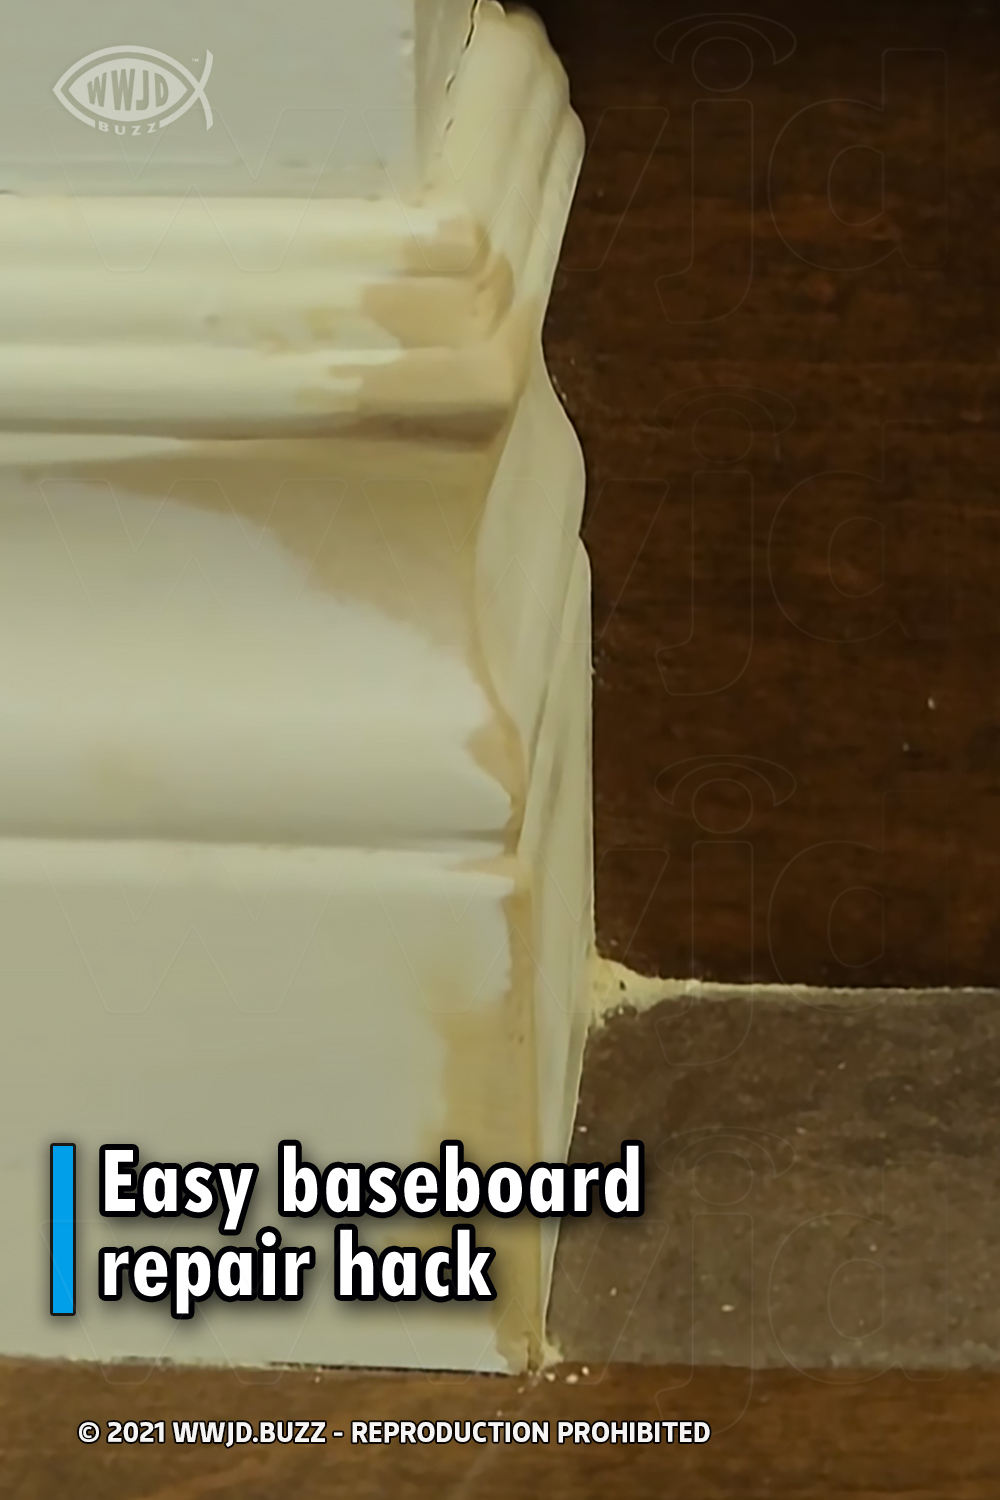 Easy baseboard repair hack